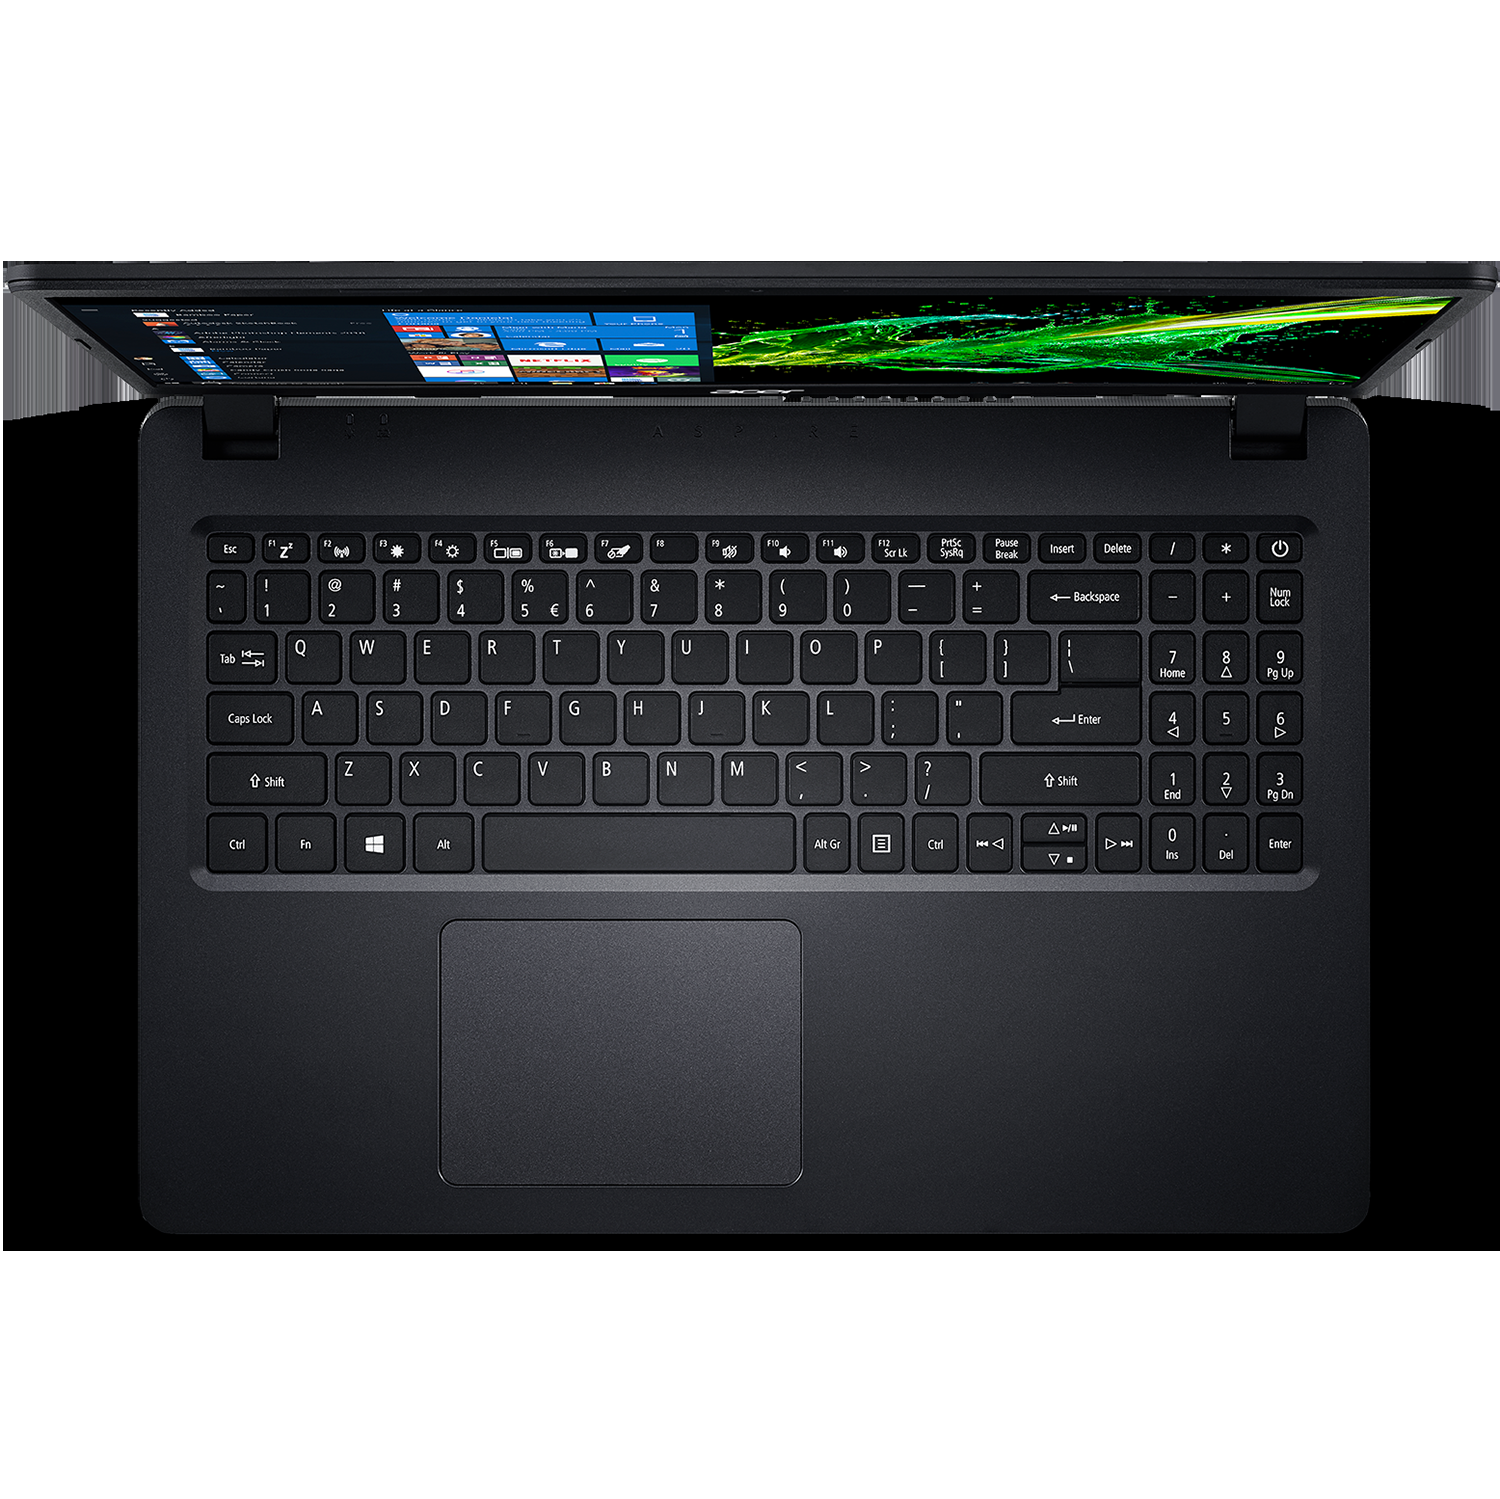 Refurbished Fair -Acer Aspire A315-42-R198 15.6” Laptop with AMD Ryzen 5 3500U, 256GB SSD, 12GB RAM, AMD Radeon Vega 8 & Windows 10 S - Black